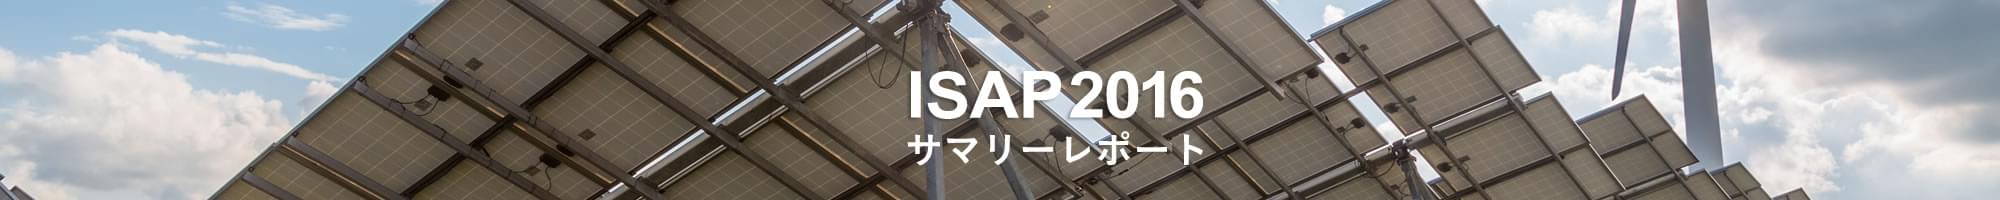 ISAP2016 Summary Report